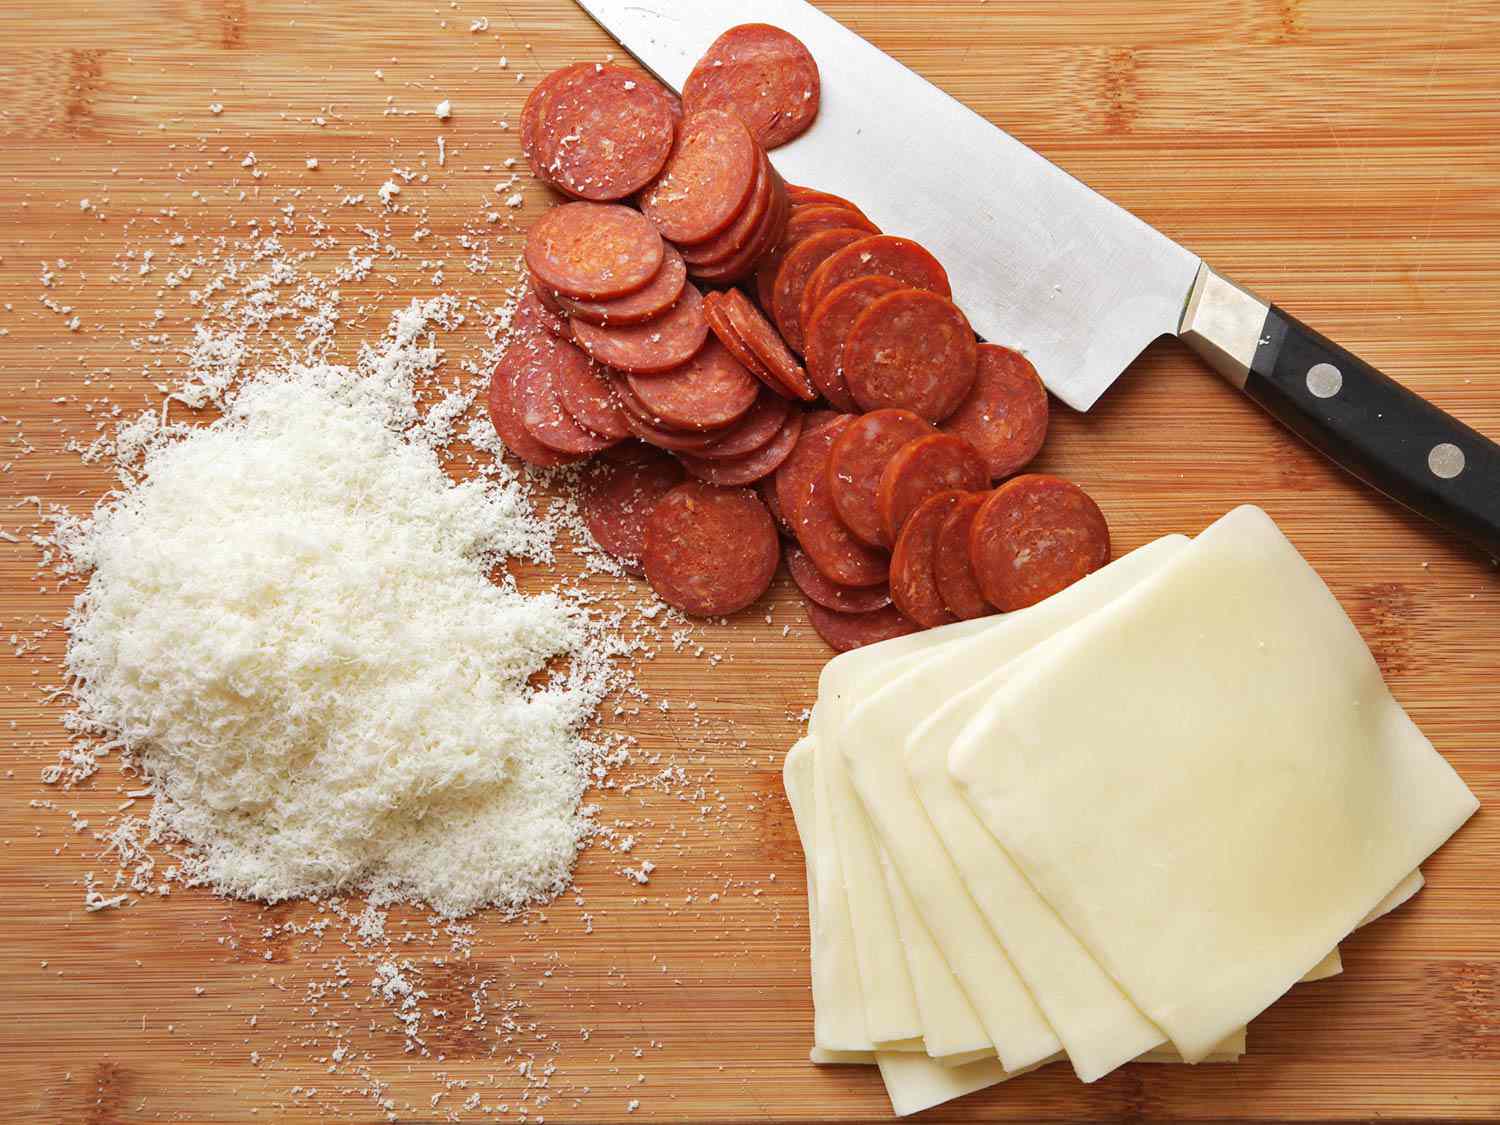 Toppings for Sicilian-style pizza: ground Pecorino, pepperoni, and sliced mozzarella cheese.